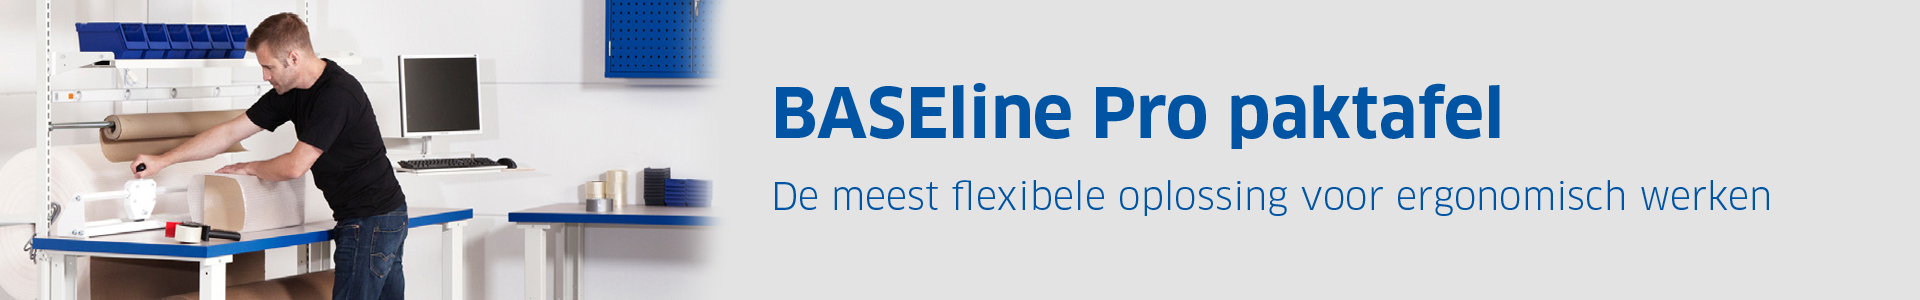 BASEline Pro